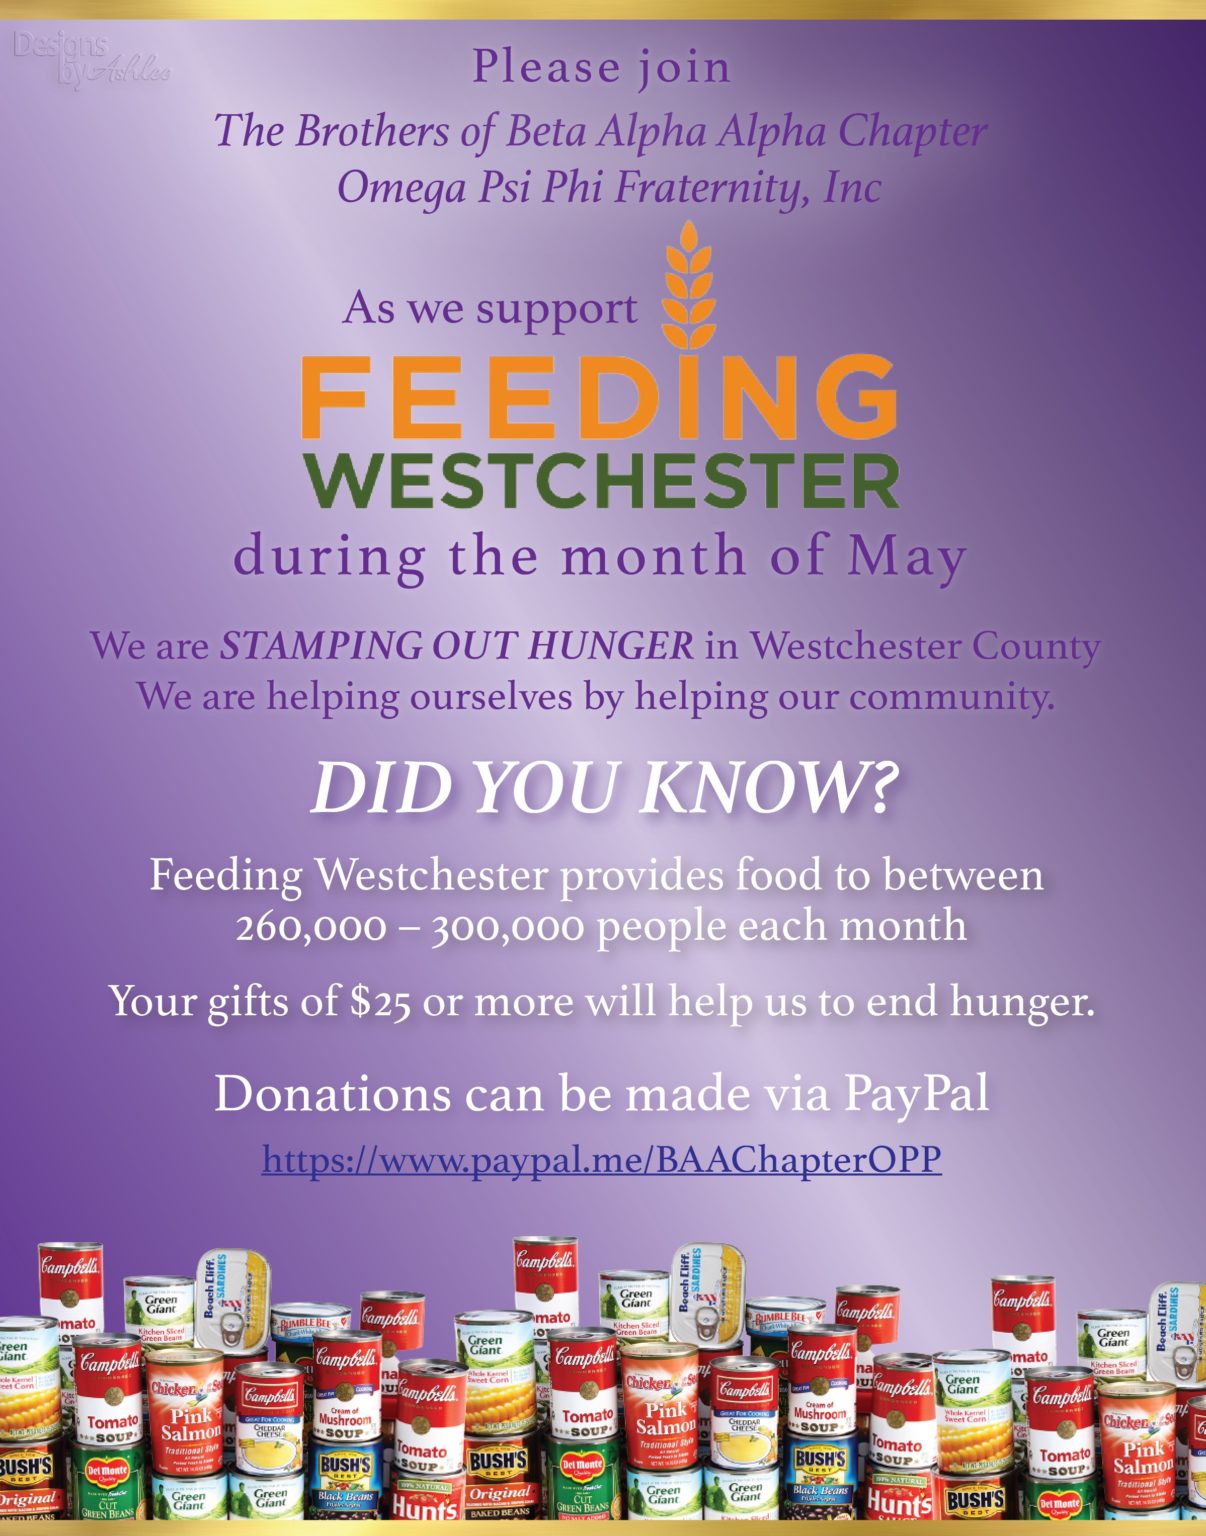 Feeding Westchester Omega Psi Phi Fraternity, Inc.